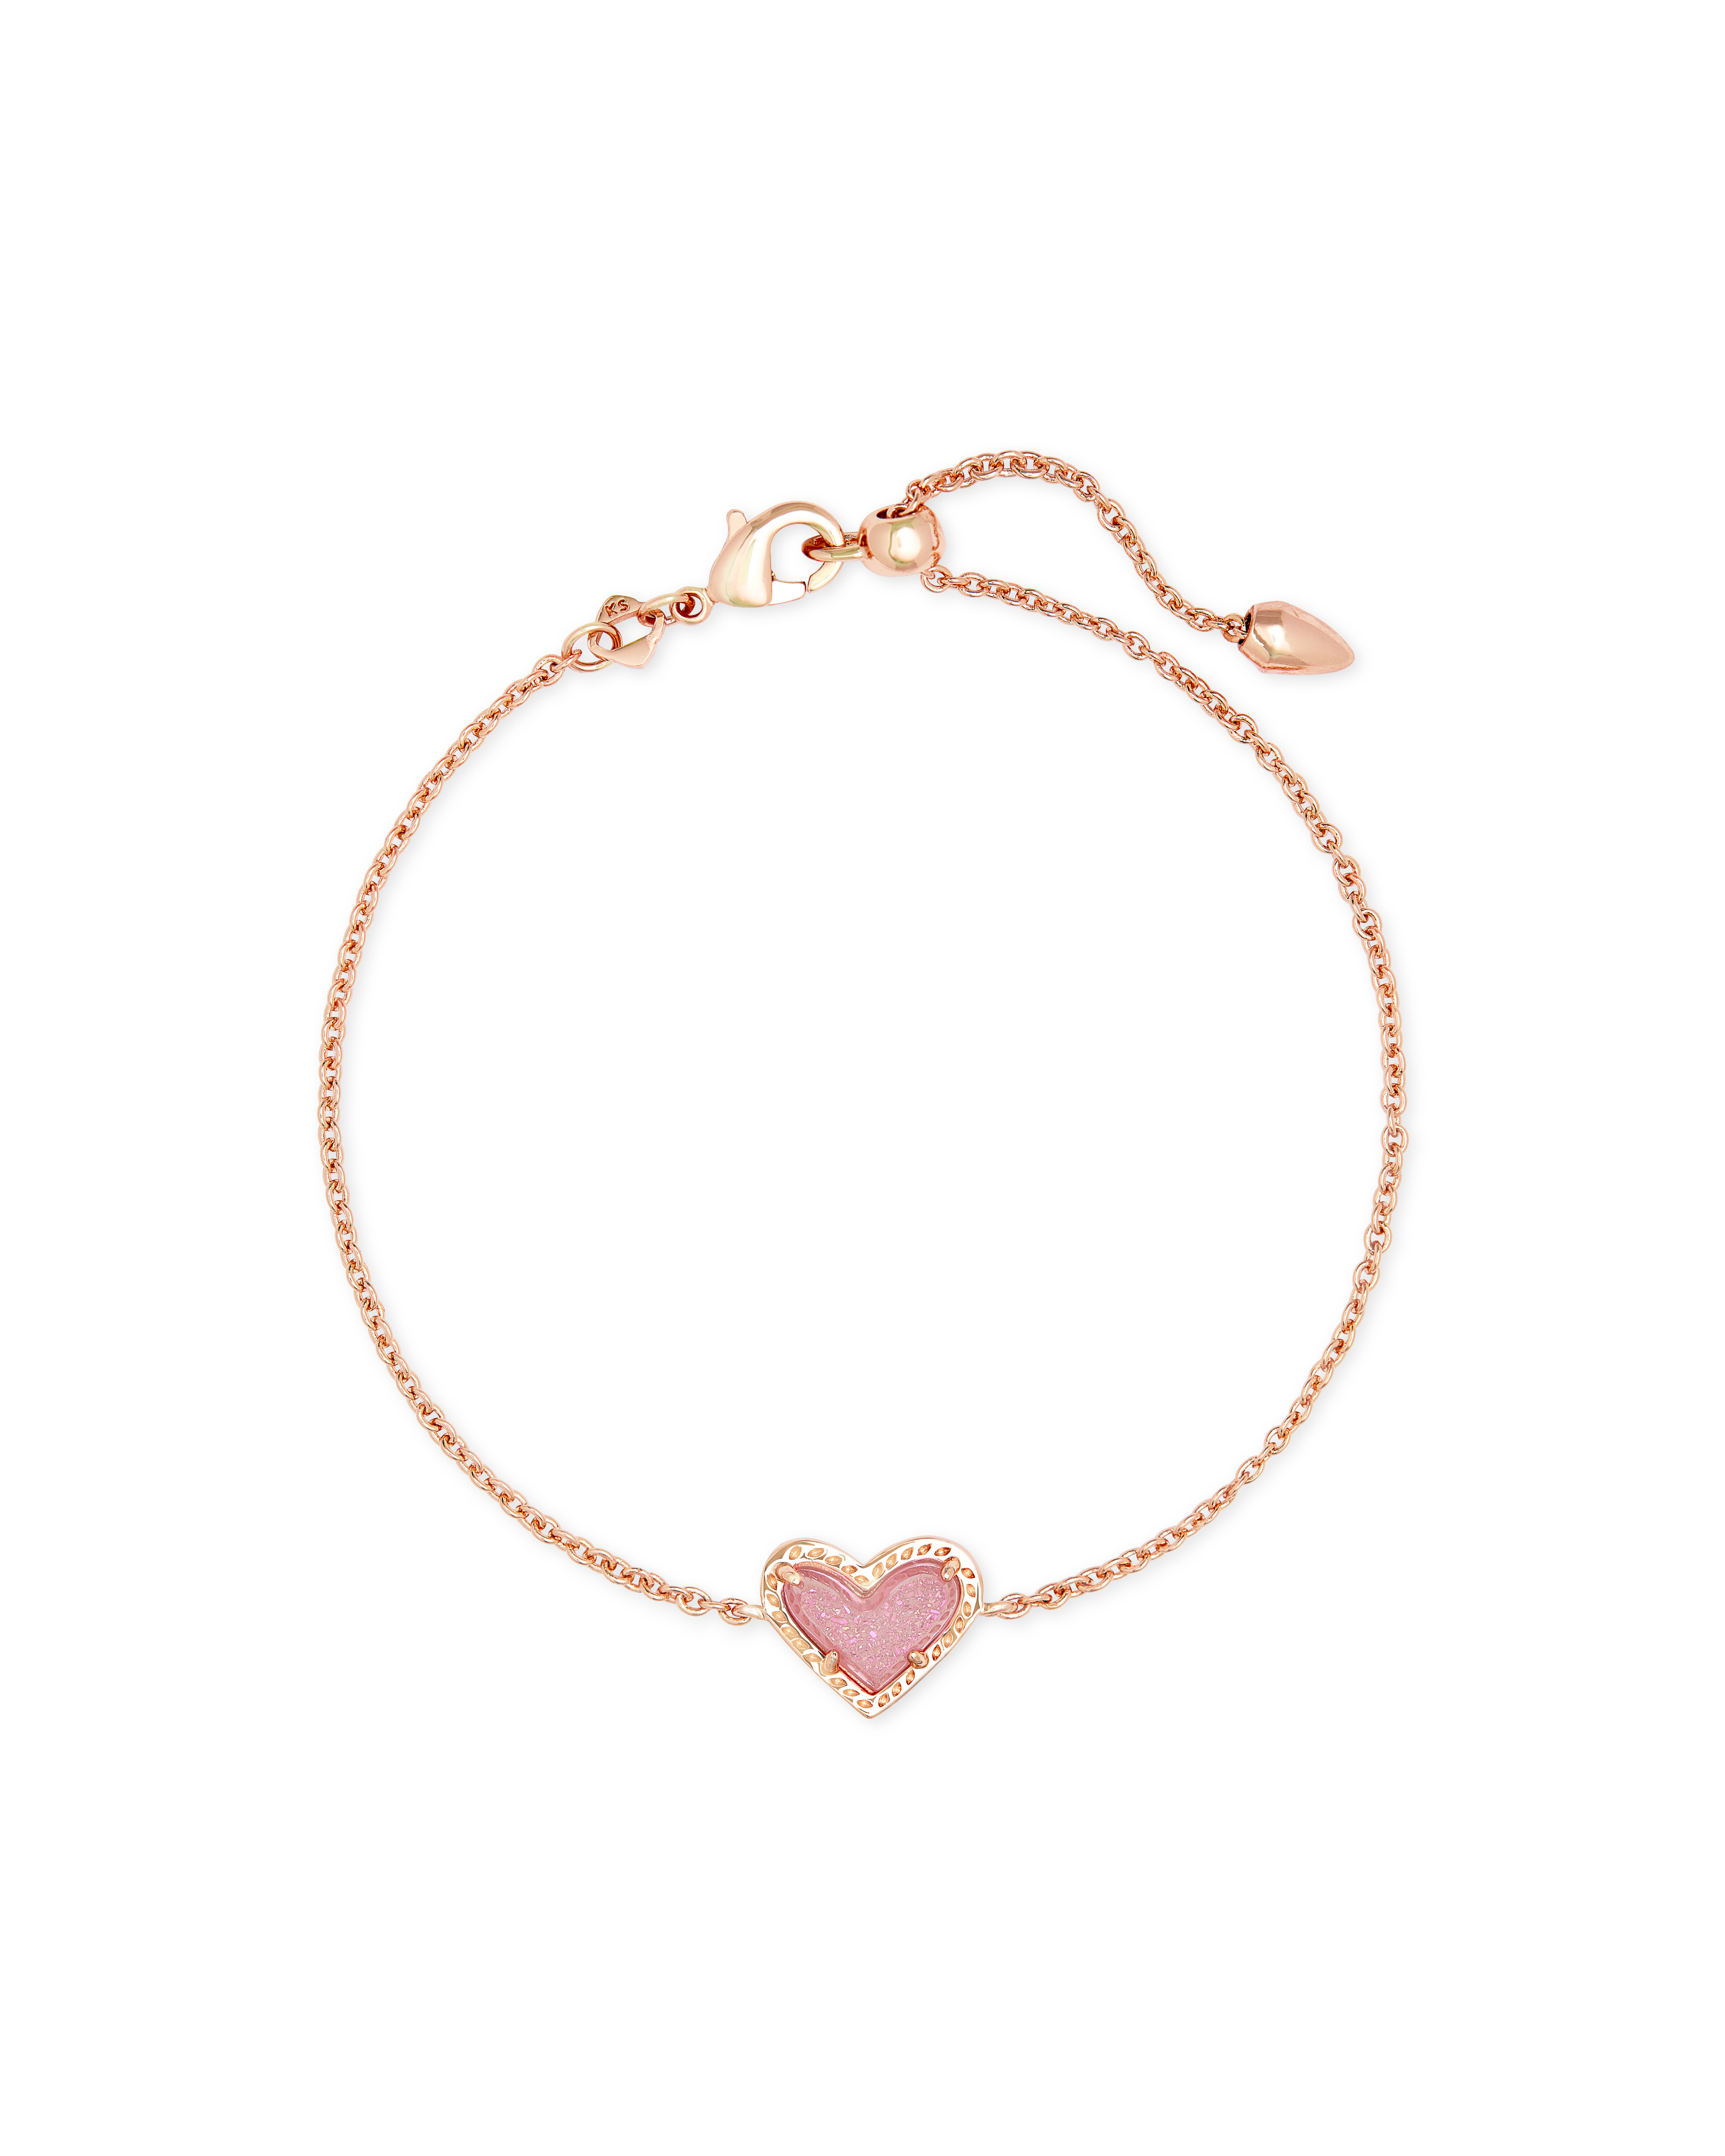 Effy Novelty 14K White Gold Diamond Heart Bracelet, 0.10 TCW